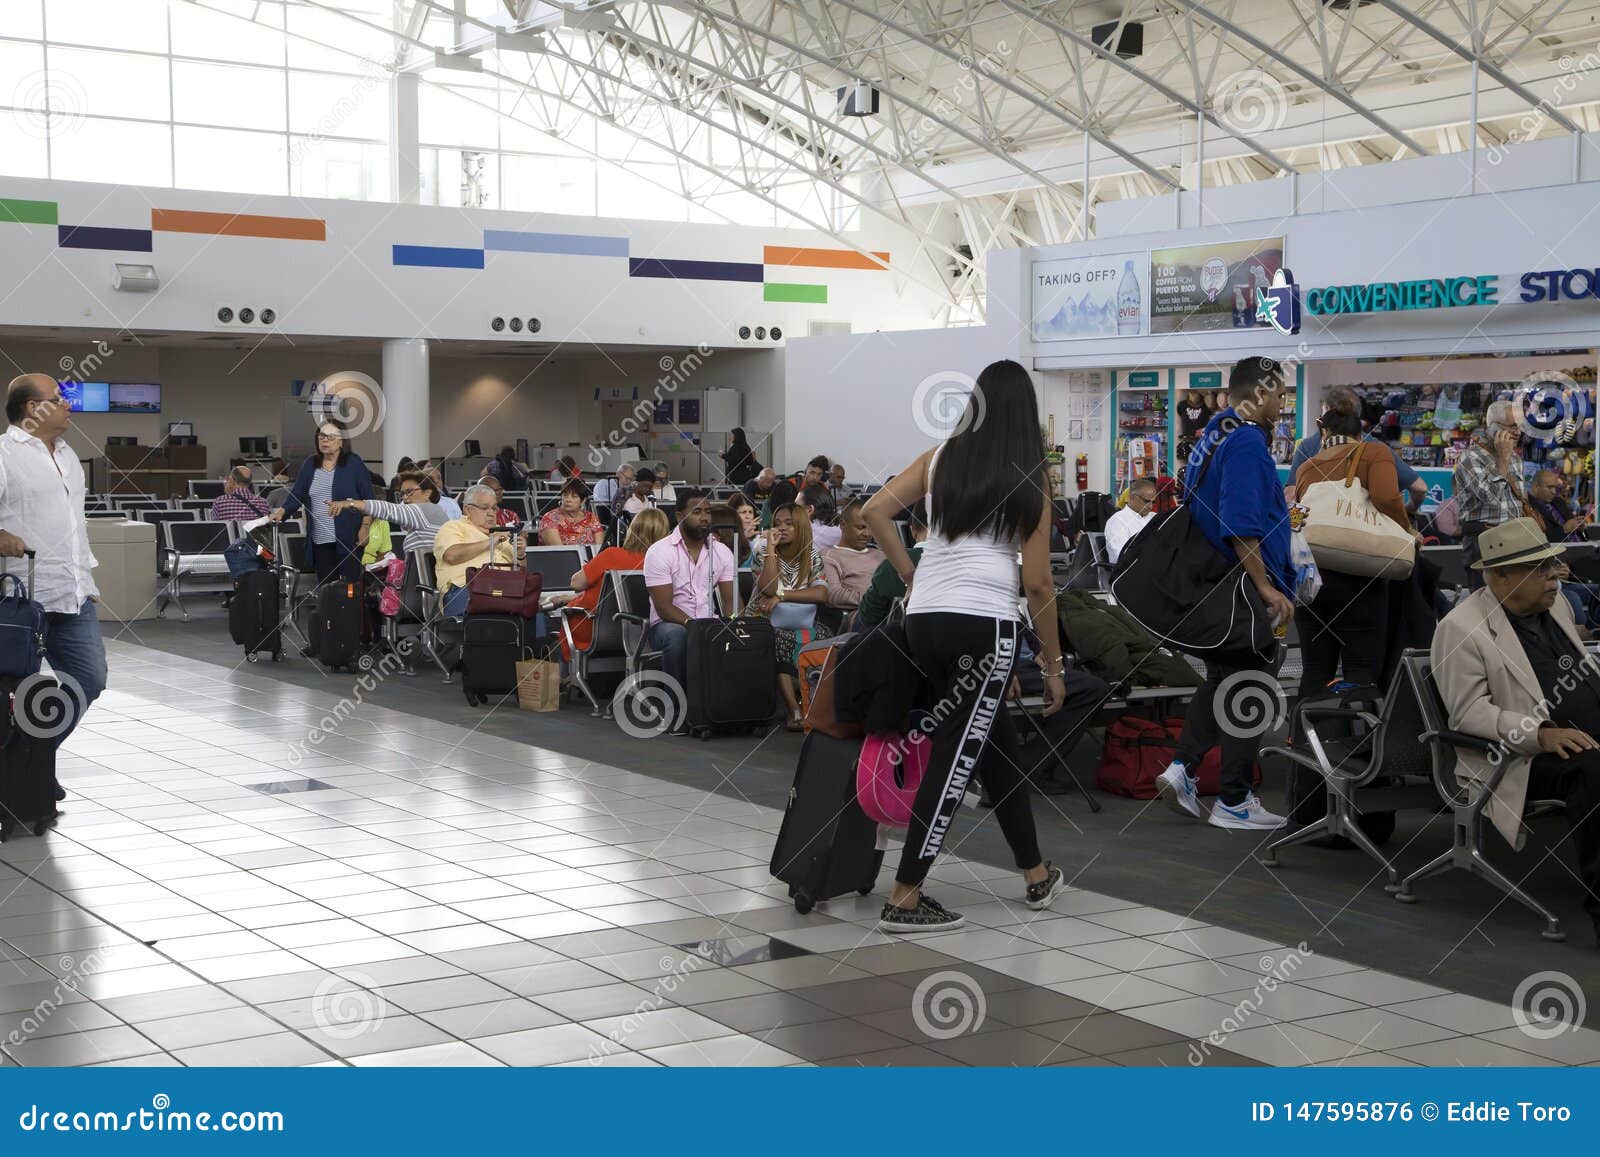 103 San Juan Airport Photos Free Royalty Free Stock Photos From Dreamstime